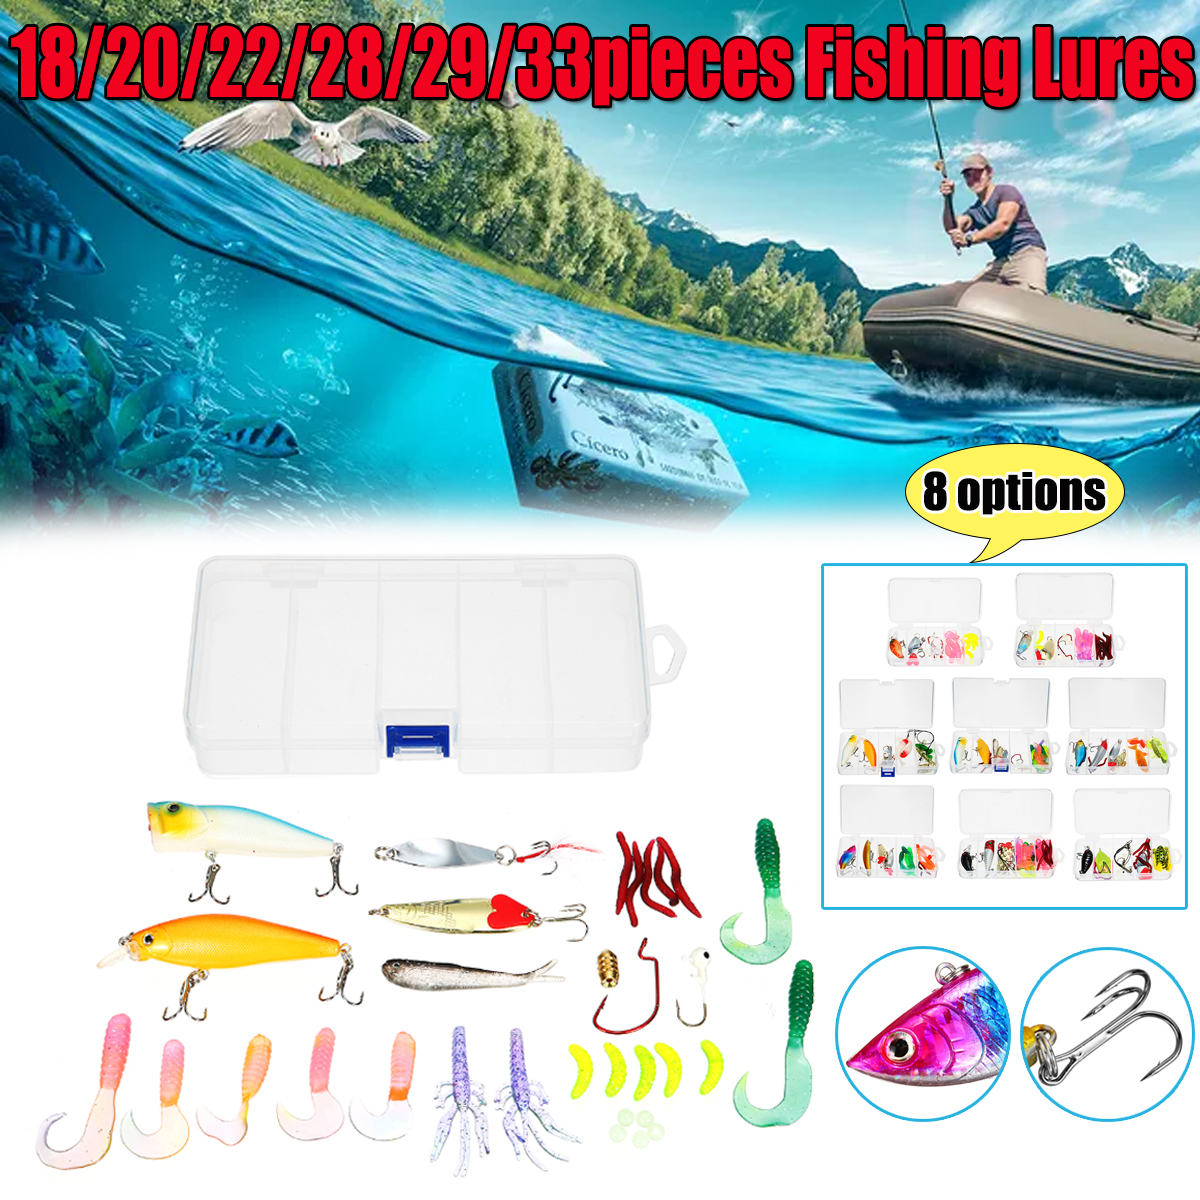 ZANLURE-182022282933-Pcs-Fishing-Lure-Set-Fish-Bait-And-Fish-Hook-Set-Multifunctional-Fishing-Access-1809823-1